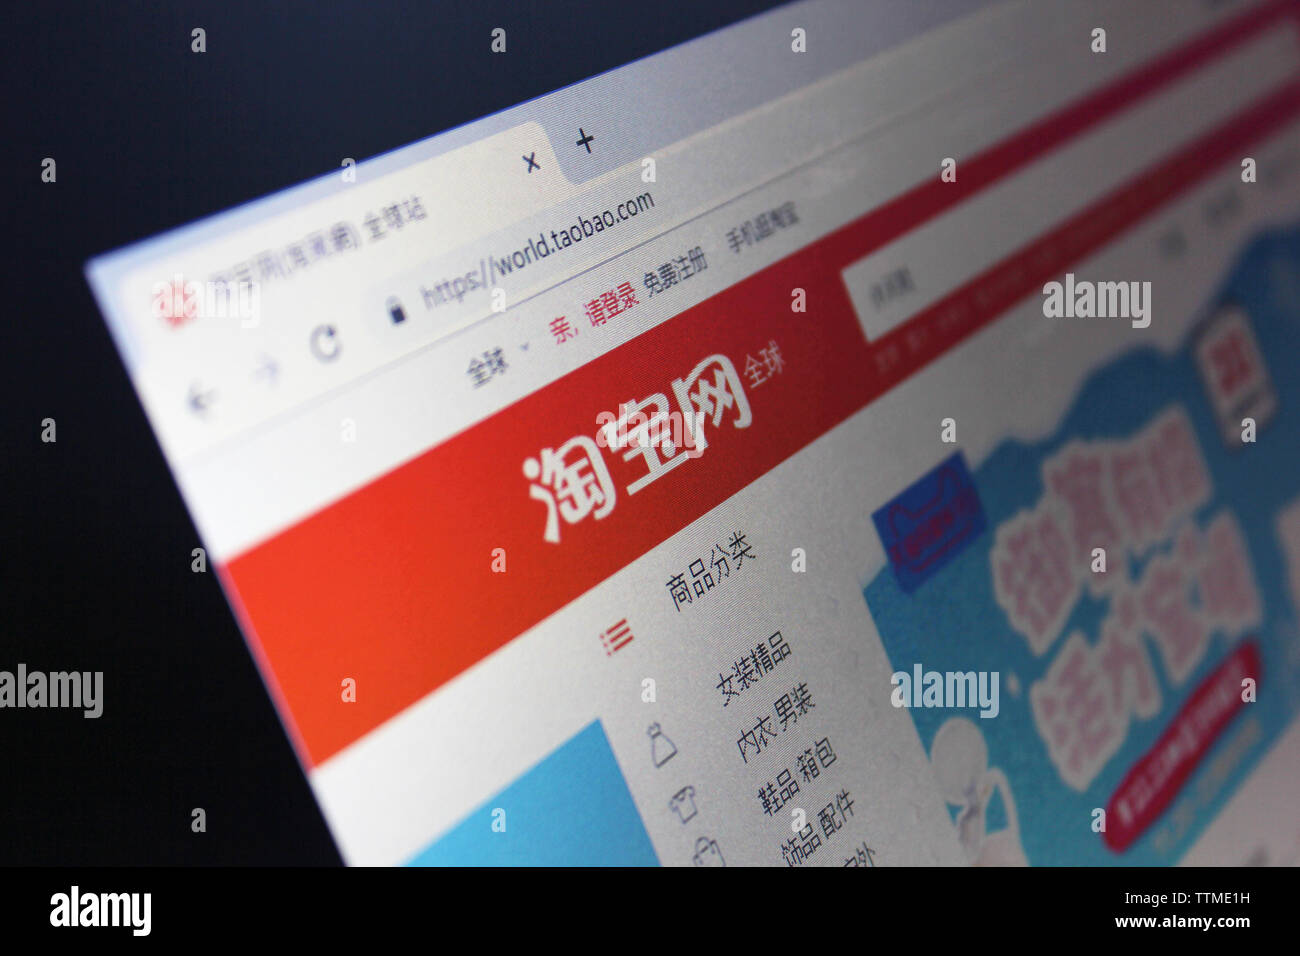 taobao website Stock Photo